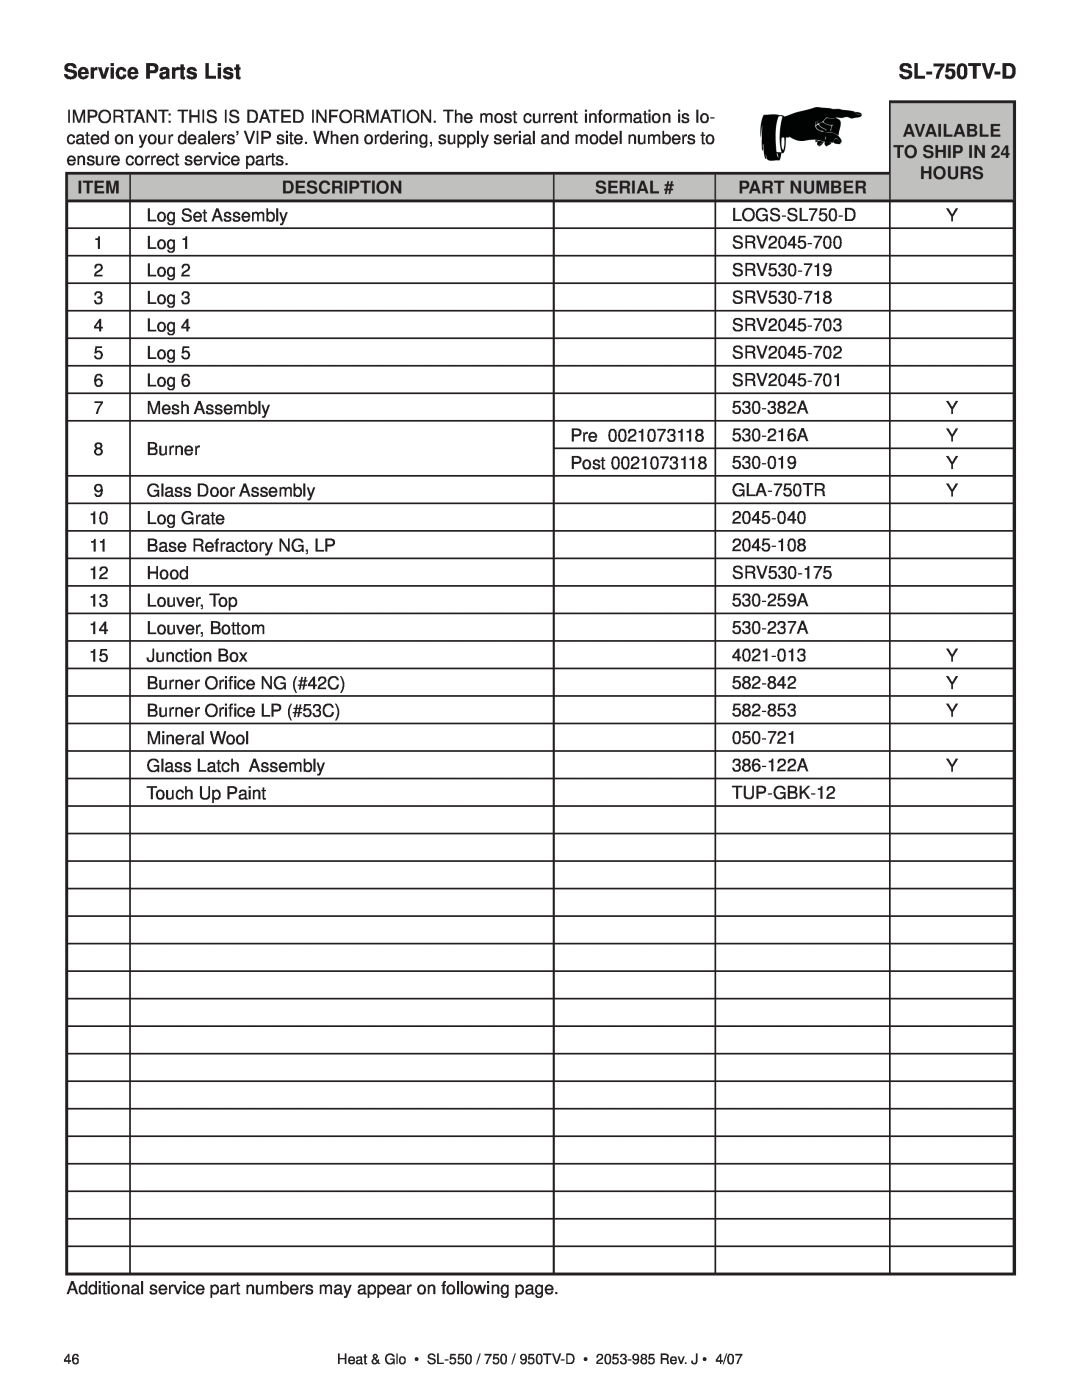 Heat & Glo LifeStyle SL-550TV-D Service Parts List, SL-750TV-D, Available, To Ship In, Hours, Item, Description, Serial # 